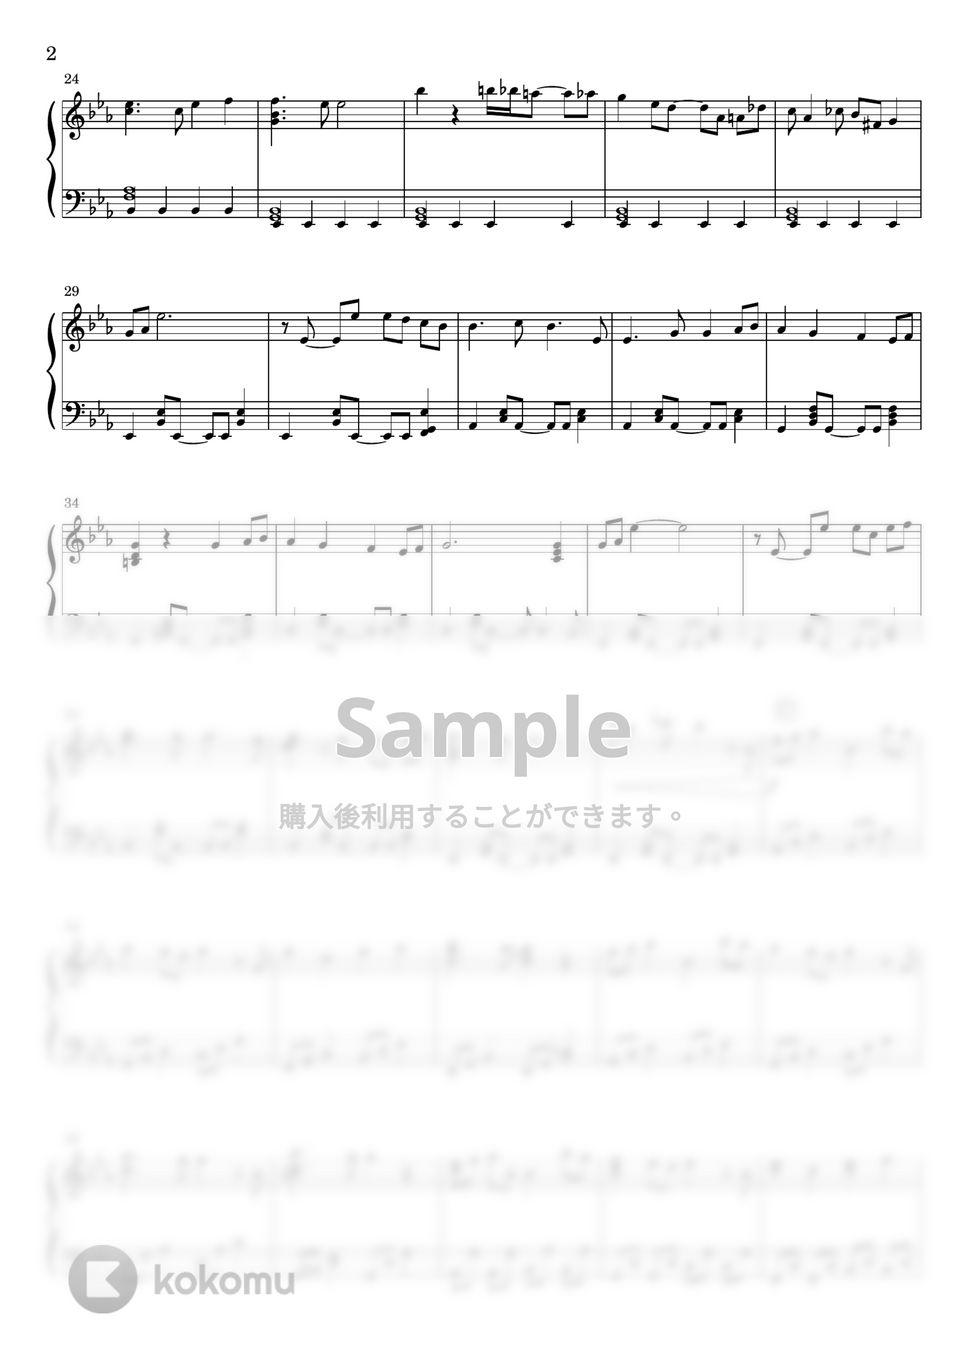 Official髭男dism - ホワイトノイズ (ピアノ/ソロ) by harupi